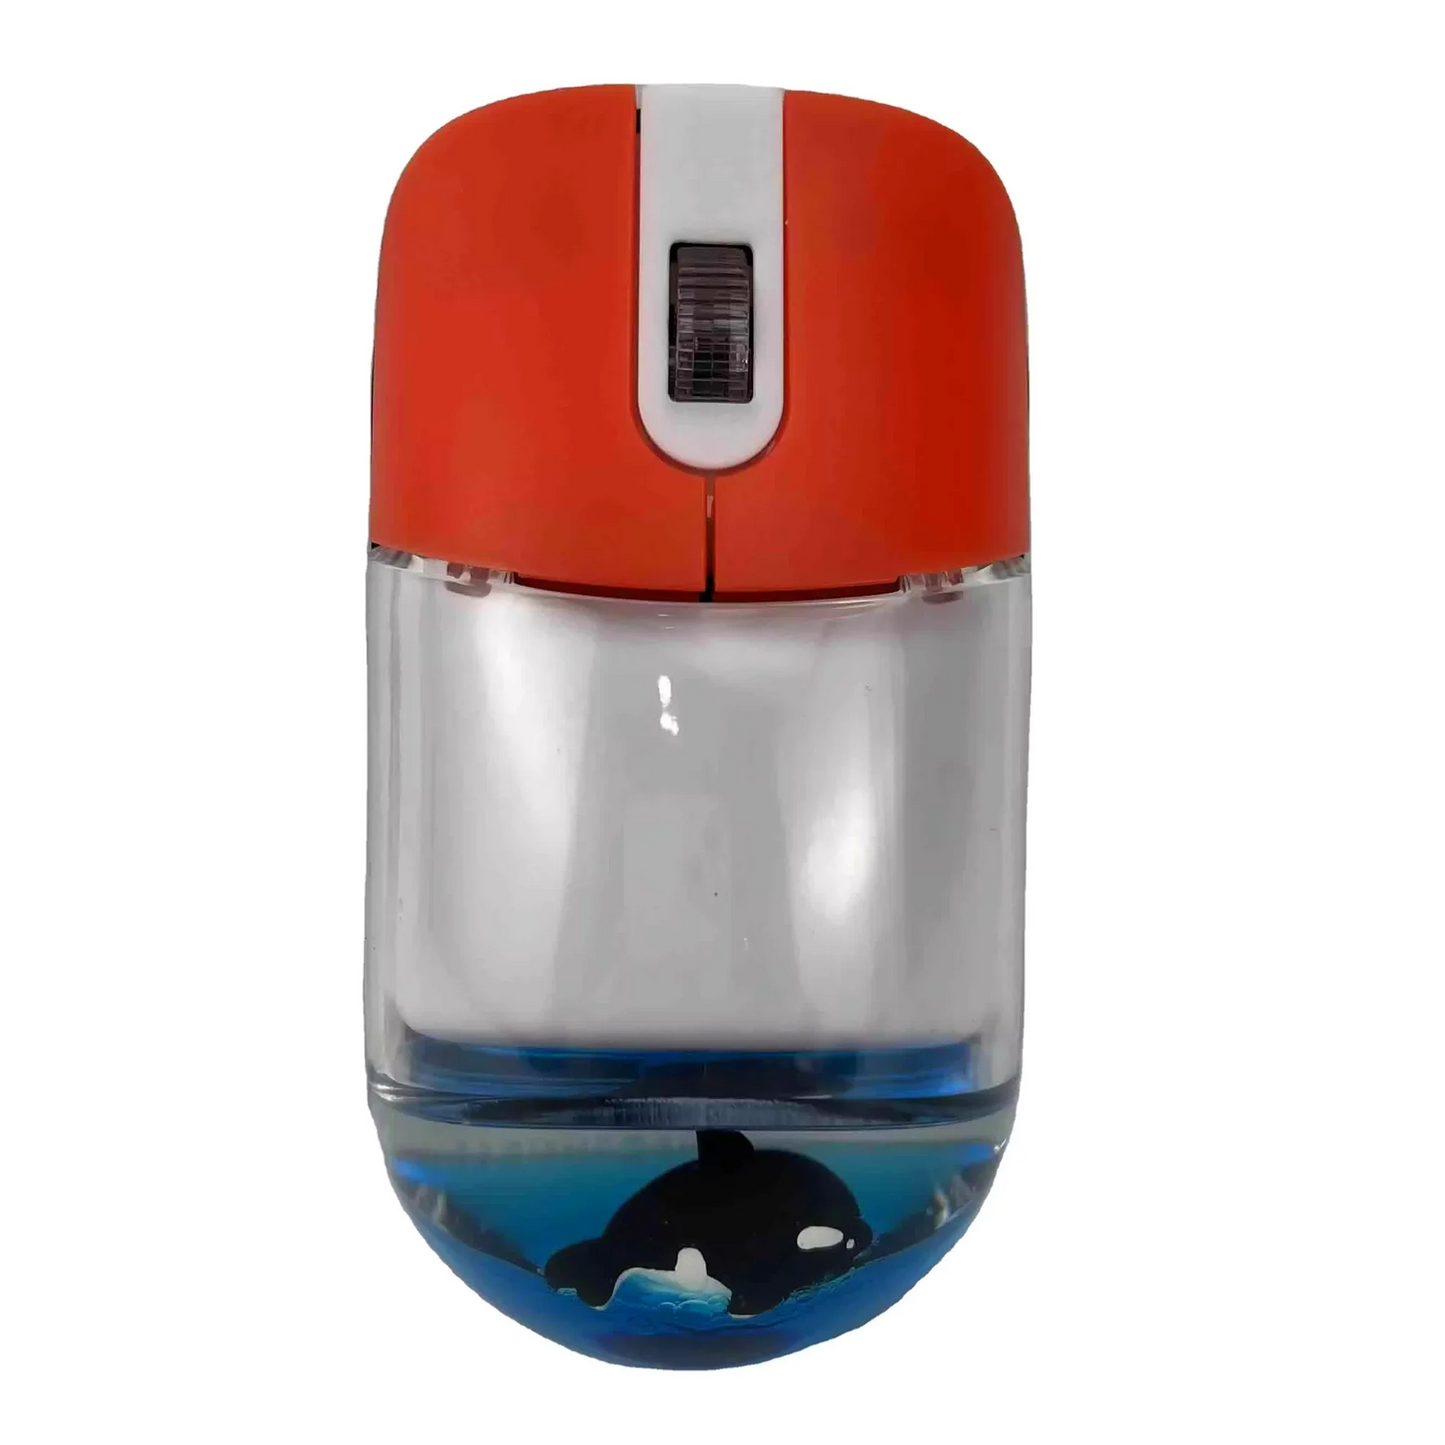 Frutiger Aero Aqua Mouse - Helvetica Aqua Liquid Wireless Optical Computer Mouse with Floating Whale